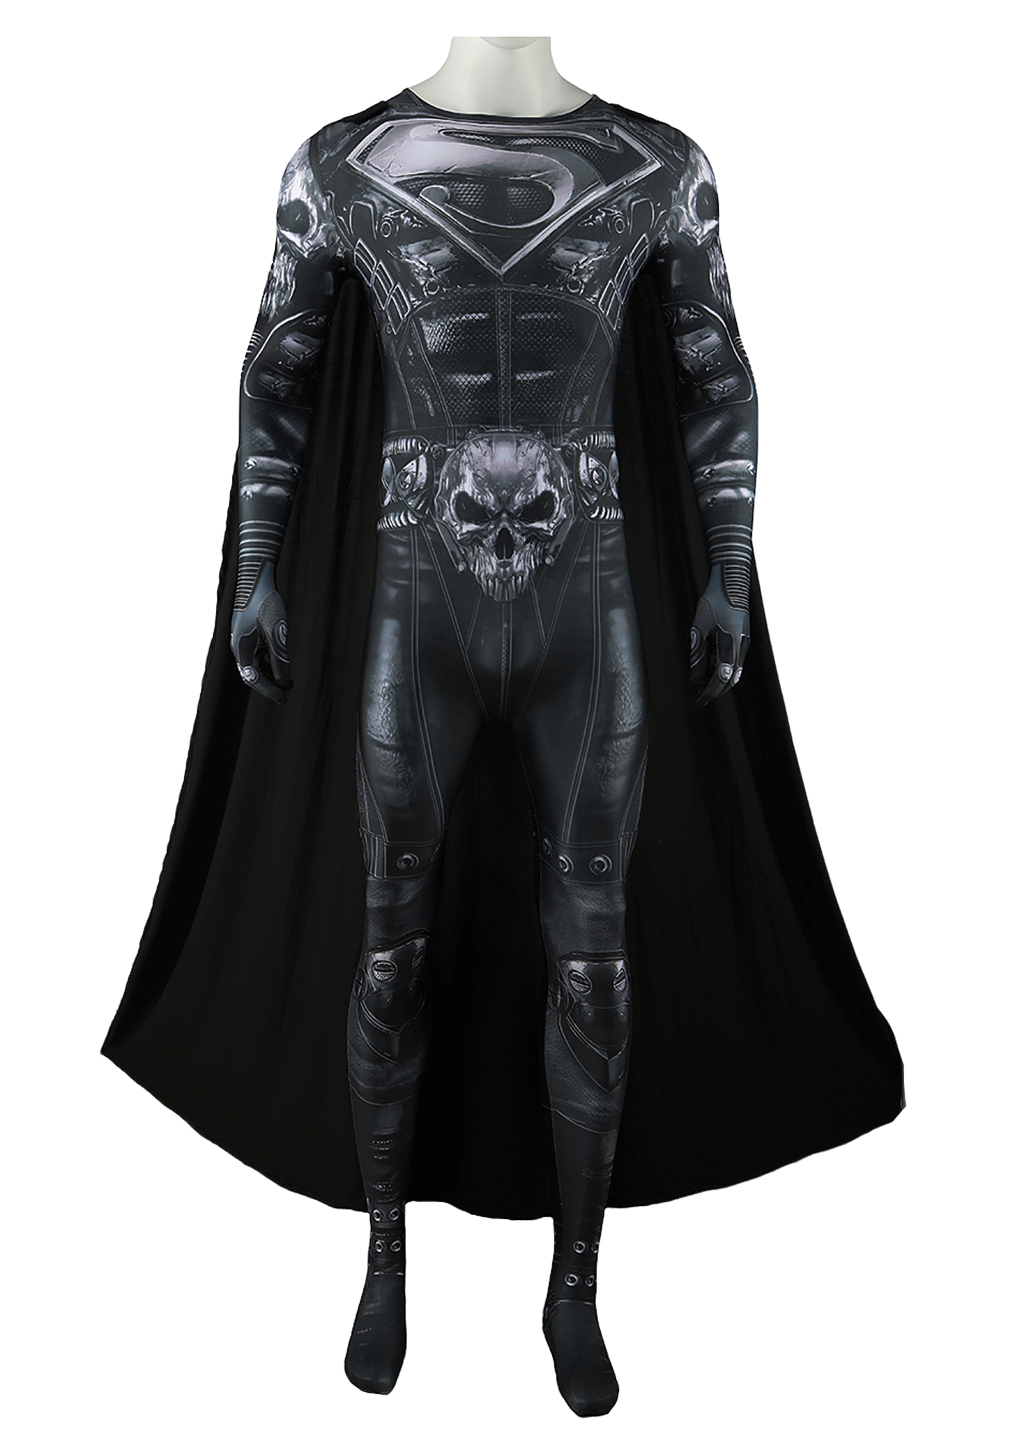 Superman Costume Dark Nights: Death Metal Bodysuit Cosplay Black Ver for Adult Kids